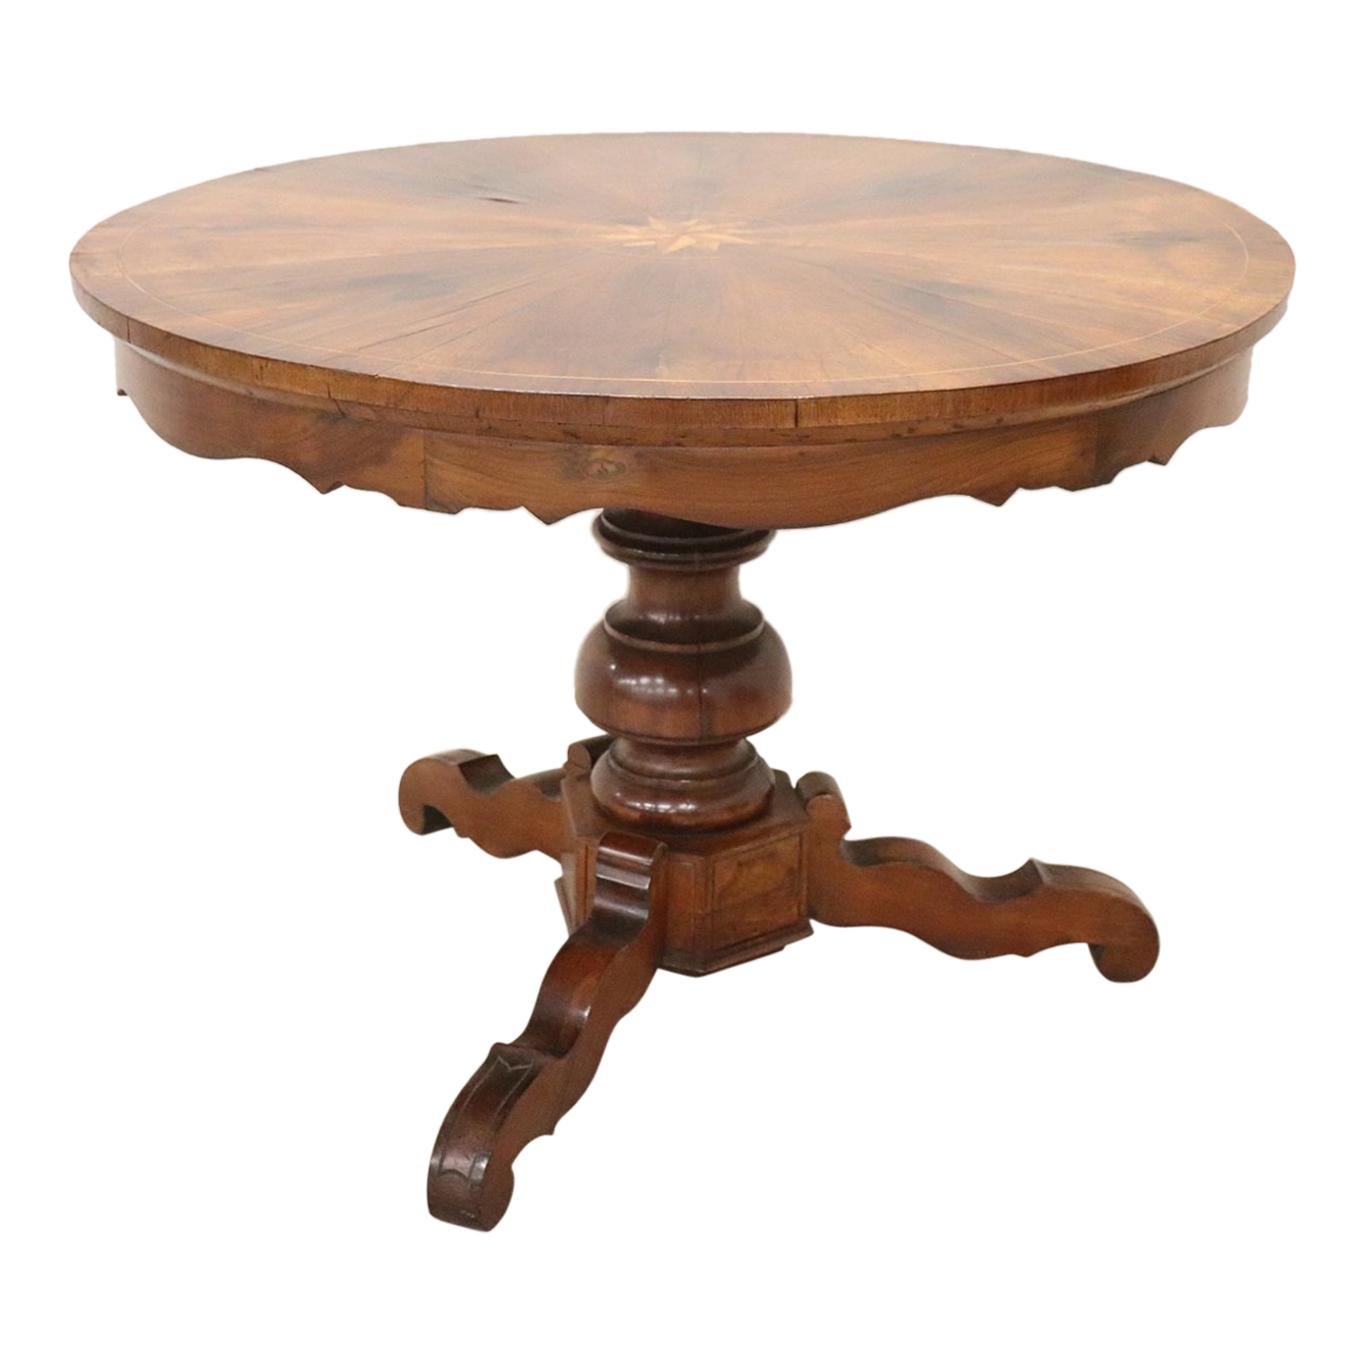 19th Century Italian Inlaid Walnut Round Center Table